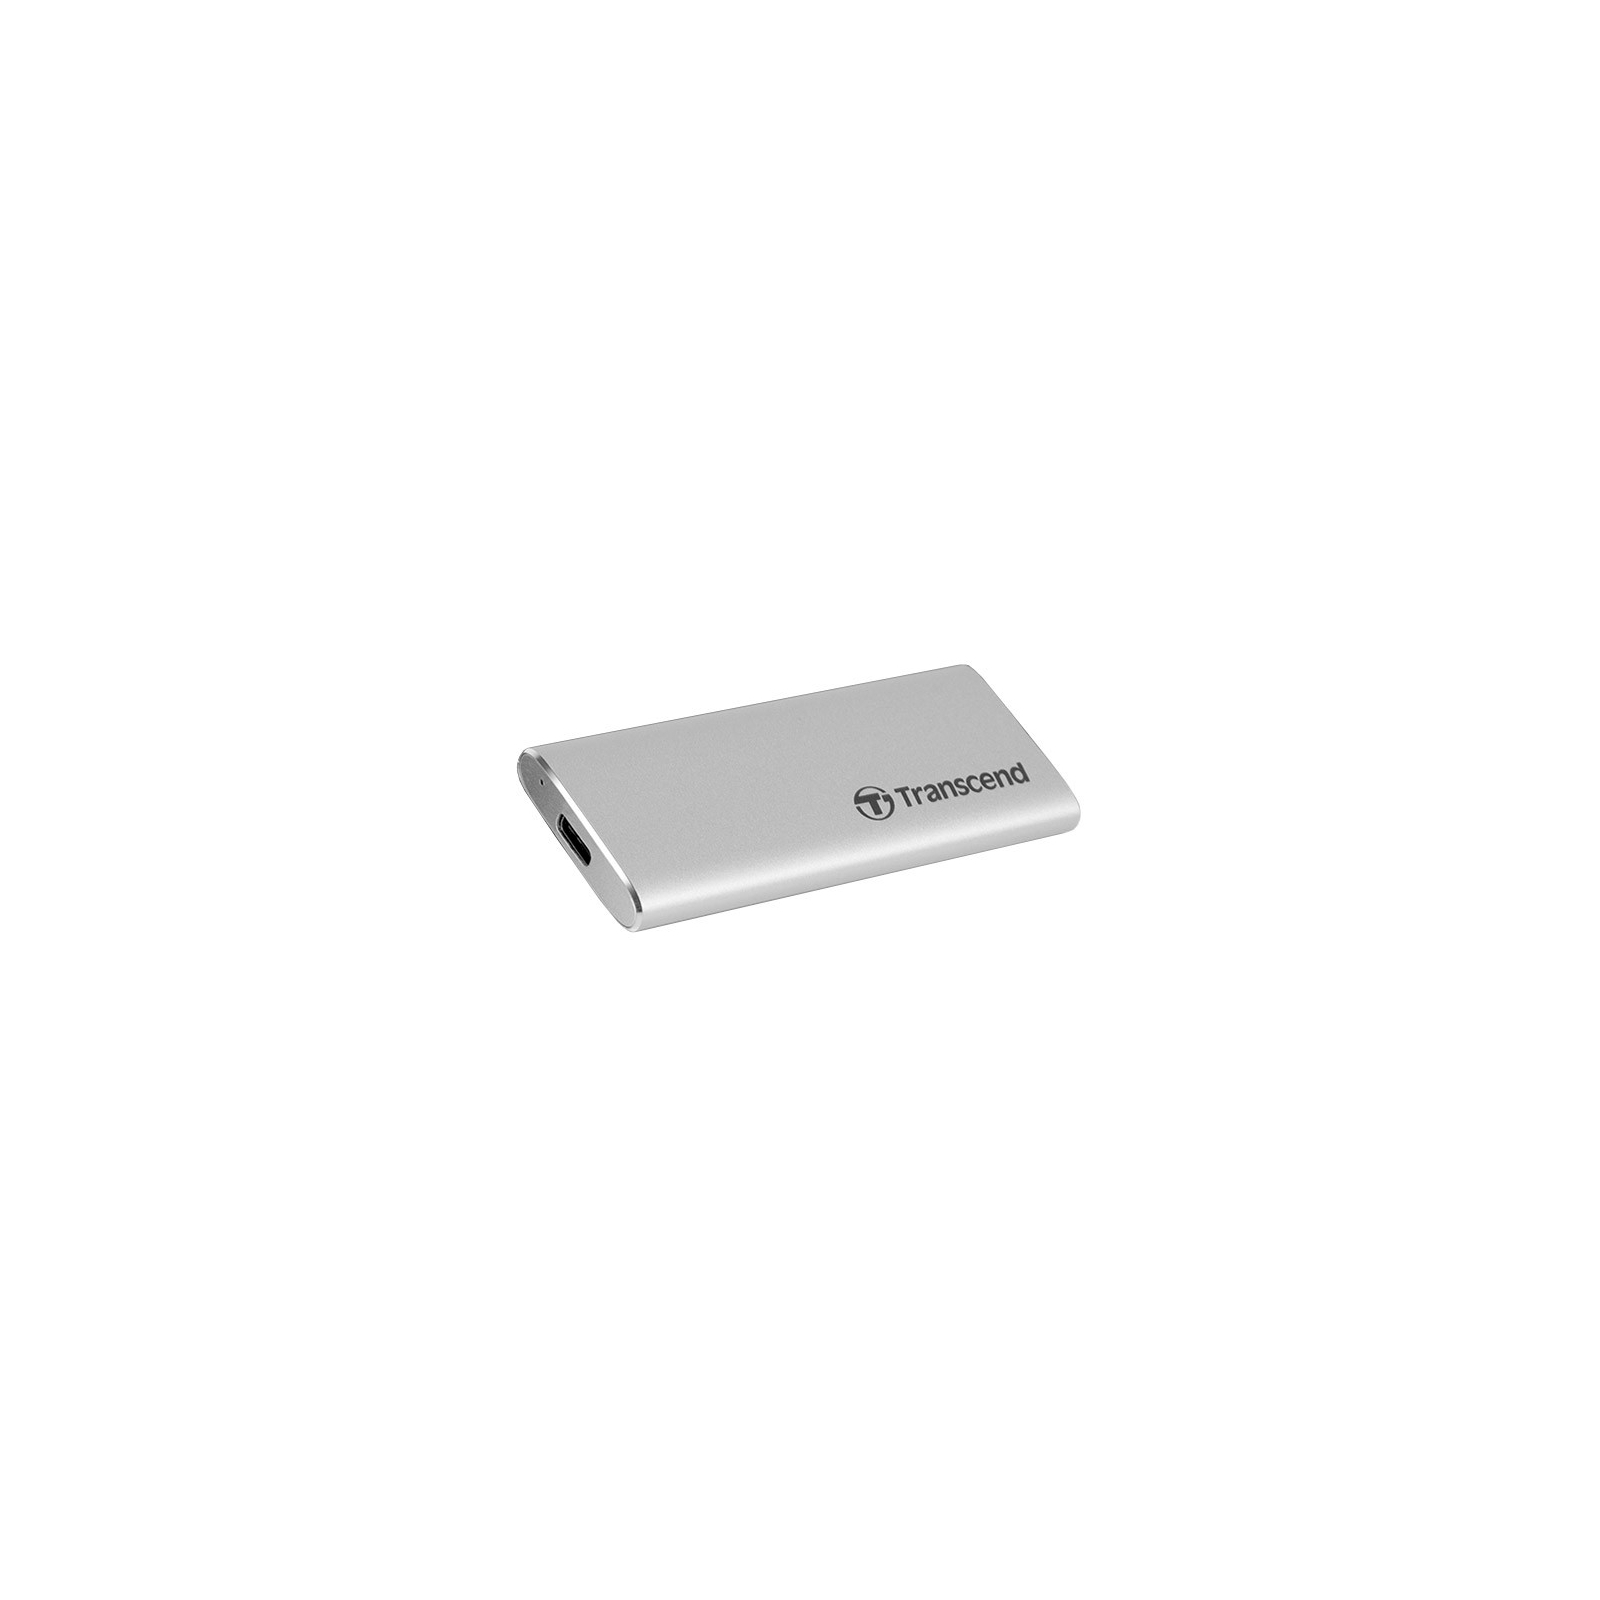 Накопитель SSD USB 3.1 120GB Transcend (TS120GESD240C) изображение 4